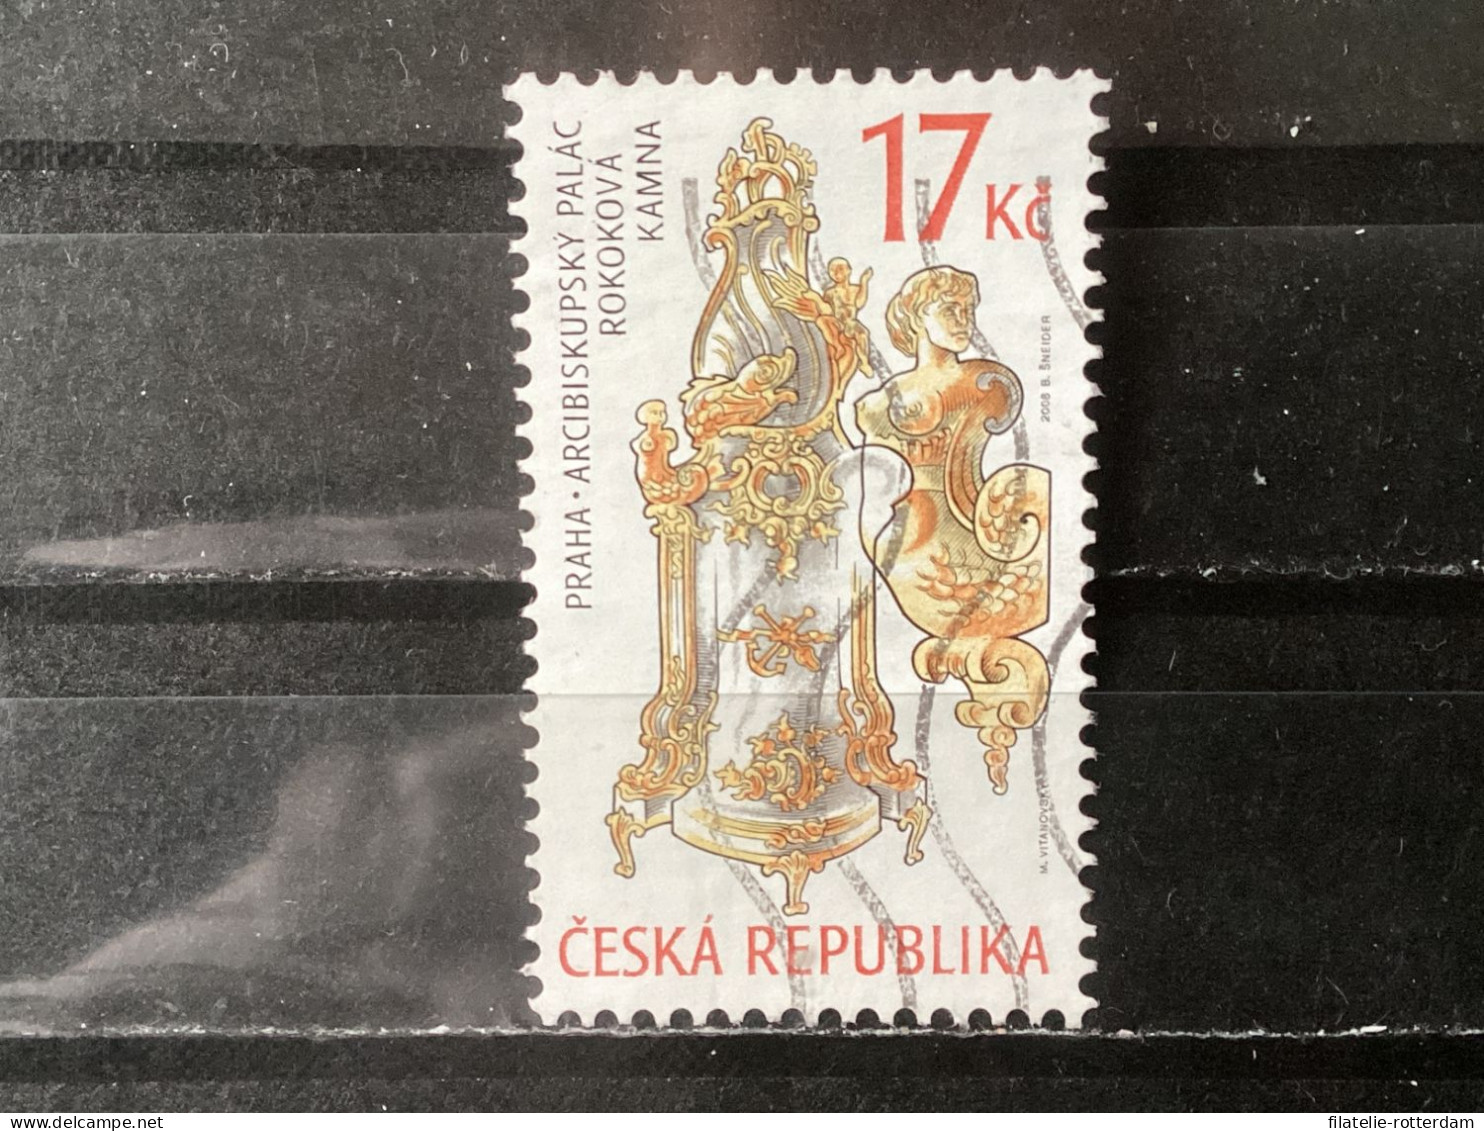 Czech Republic / Tsjechië - Stoves (17) 2008 - Used Stamps